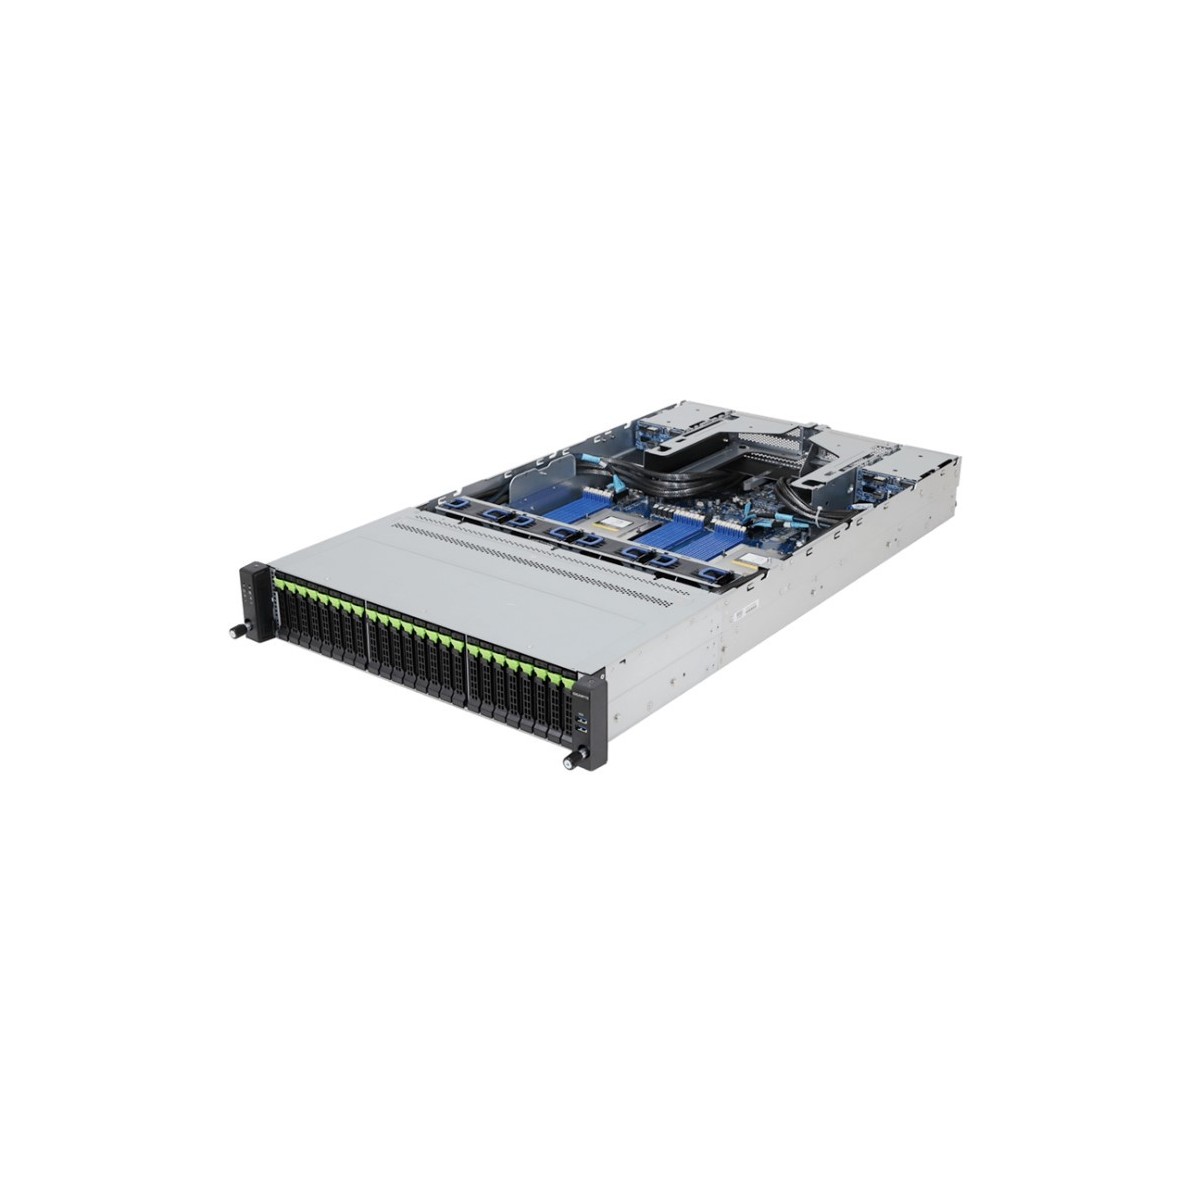 Gigabyte Rack Server R283-Z96 rev. AAE1 2U Dual Sockel SP5 R283-Z96-AAE1 - Server - AMD EPYC